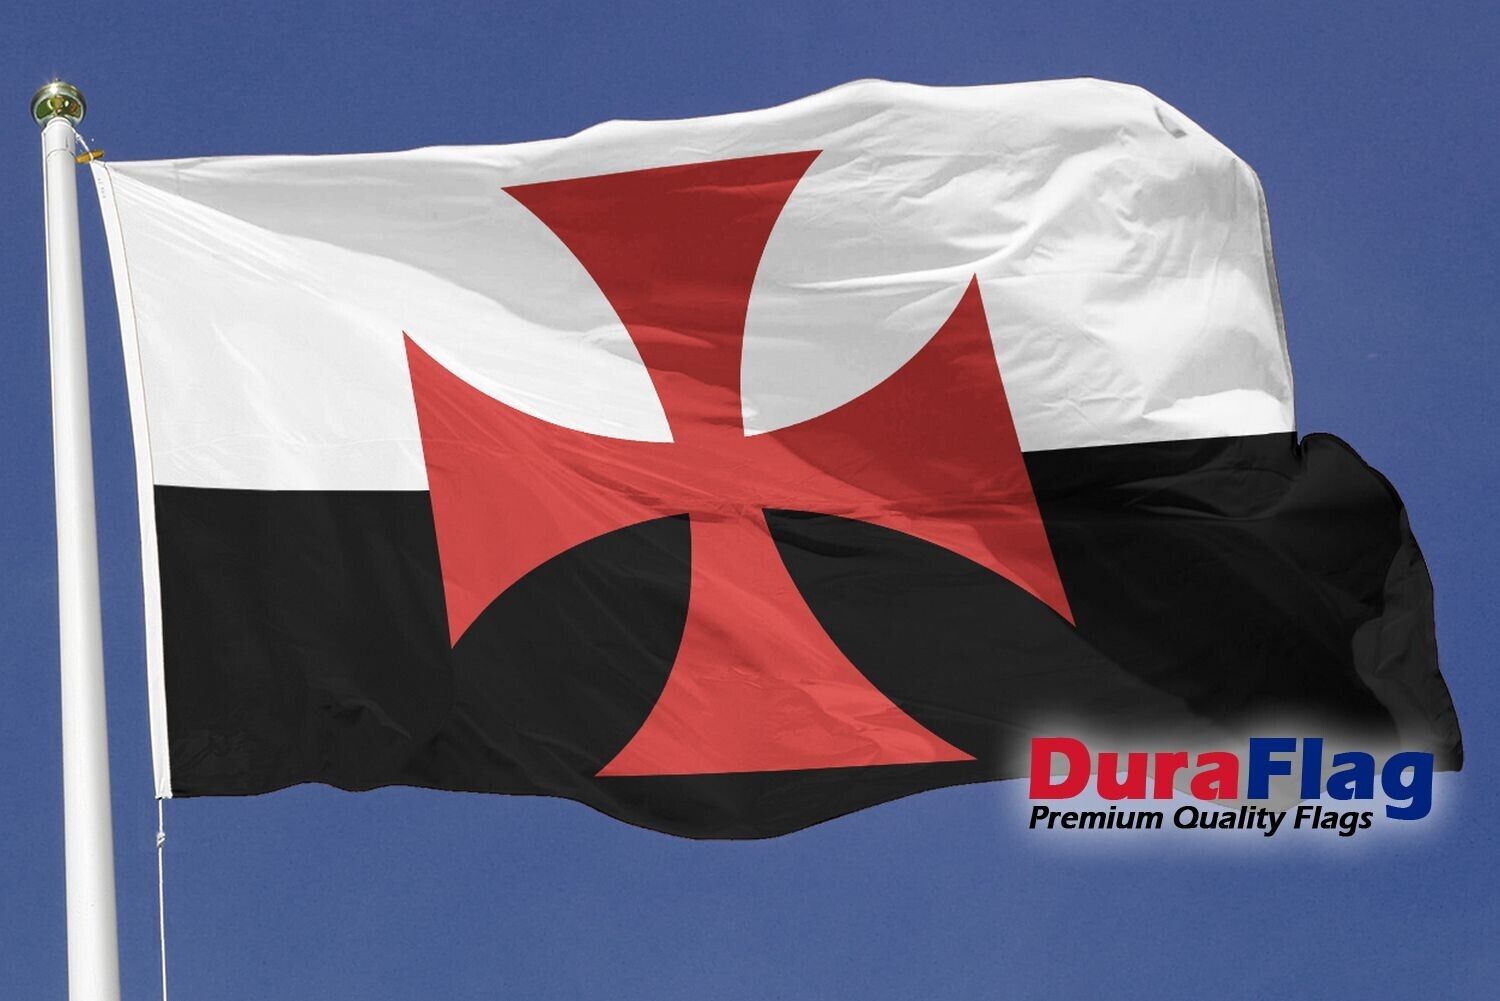 Crusades Duraflag Premium Quality (20x12inch) Flag